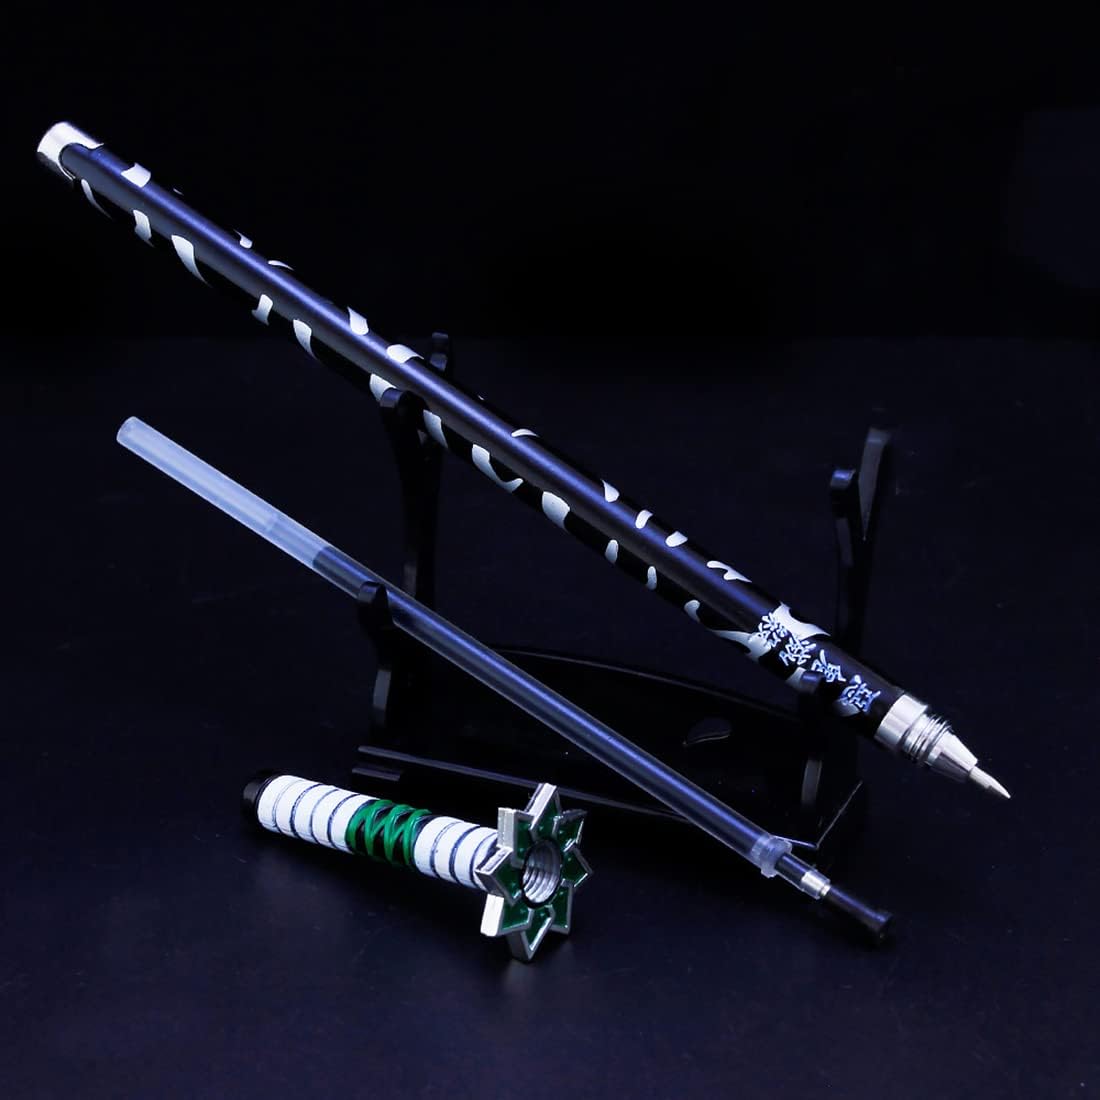 Demon Slayer Kimetsu No Yaiba Signature Pen Samurai Sword Katana sanemi shinazugawa accessories قاتل الشياطين قلم كتابة بشكل سيف سانمي